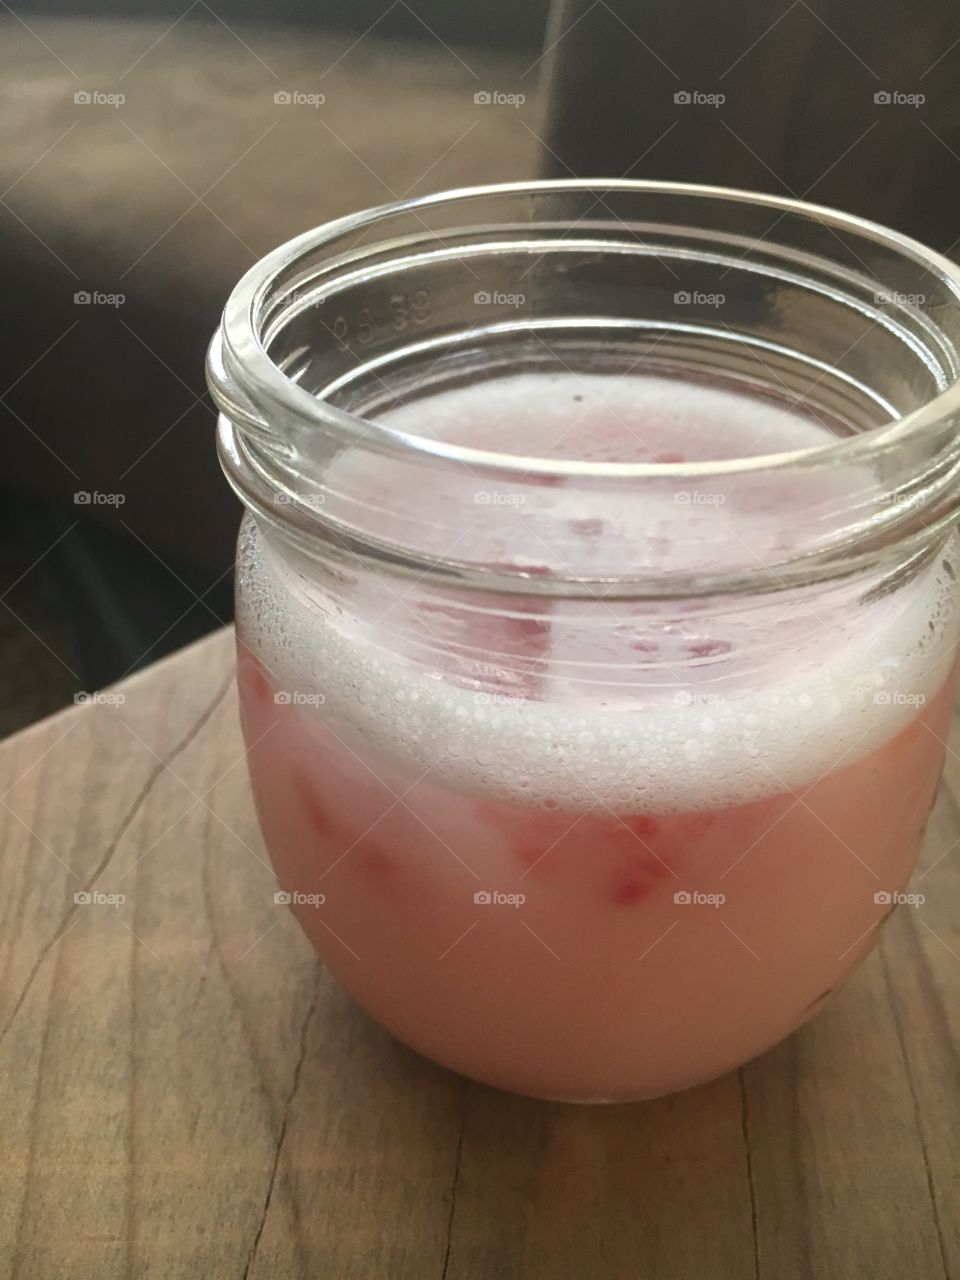 A pink drink